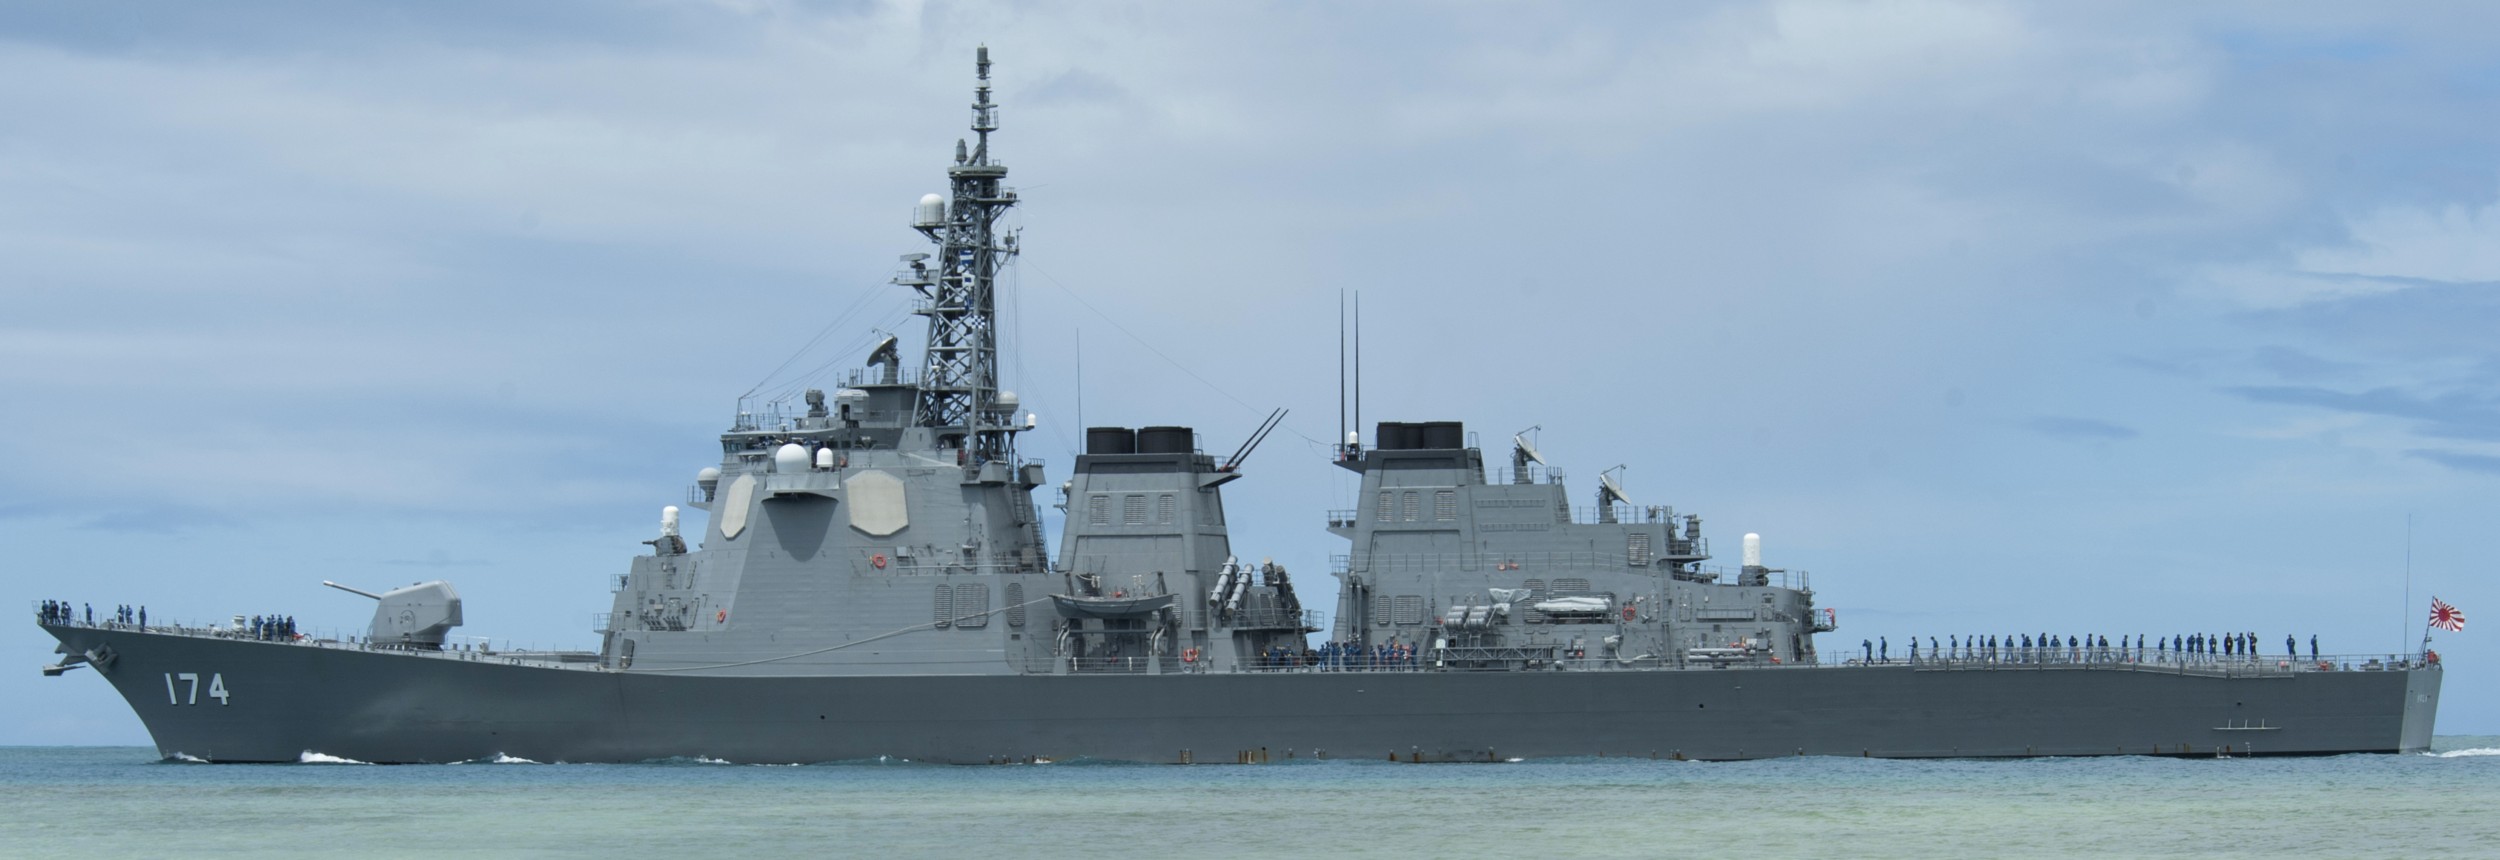 ddg-174 js kirishima kongo class guided missile destroyer aegis japan maritime self defense force jmsdf exercise rimpac 35